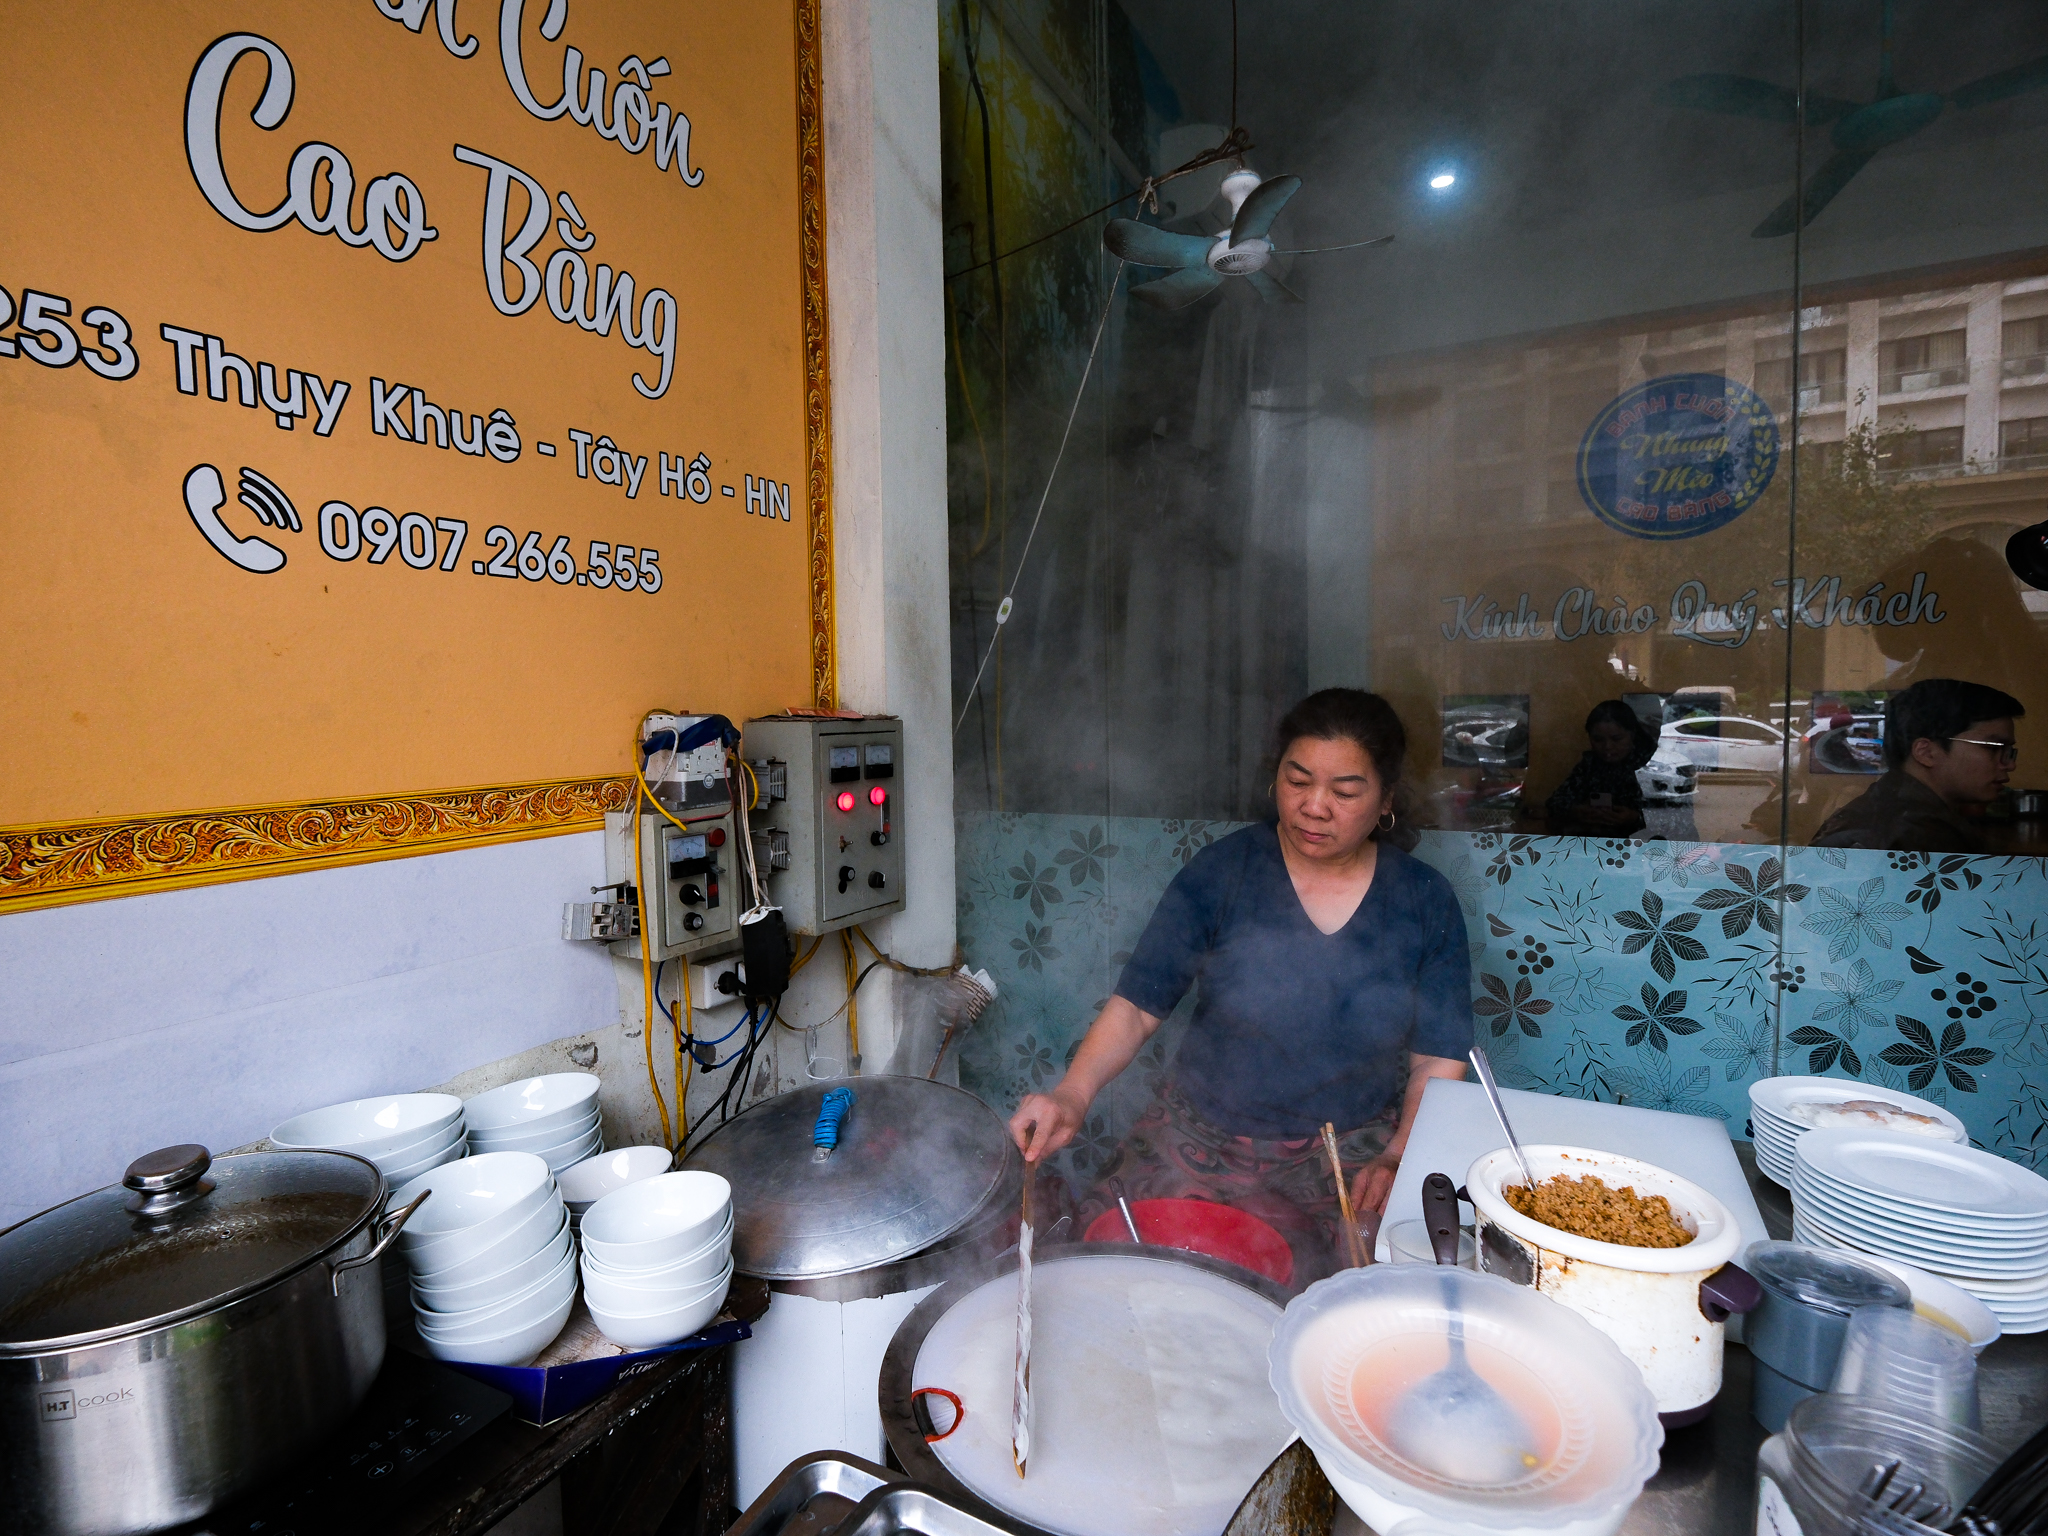 Dinh Thi Tam makes banh cuon (steamed rice rolls) at her Banh Cuon Cao Bang stall in Hanoi, Vietnam. Photo: Nam Tran / Tuoi Tre News